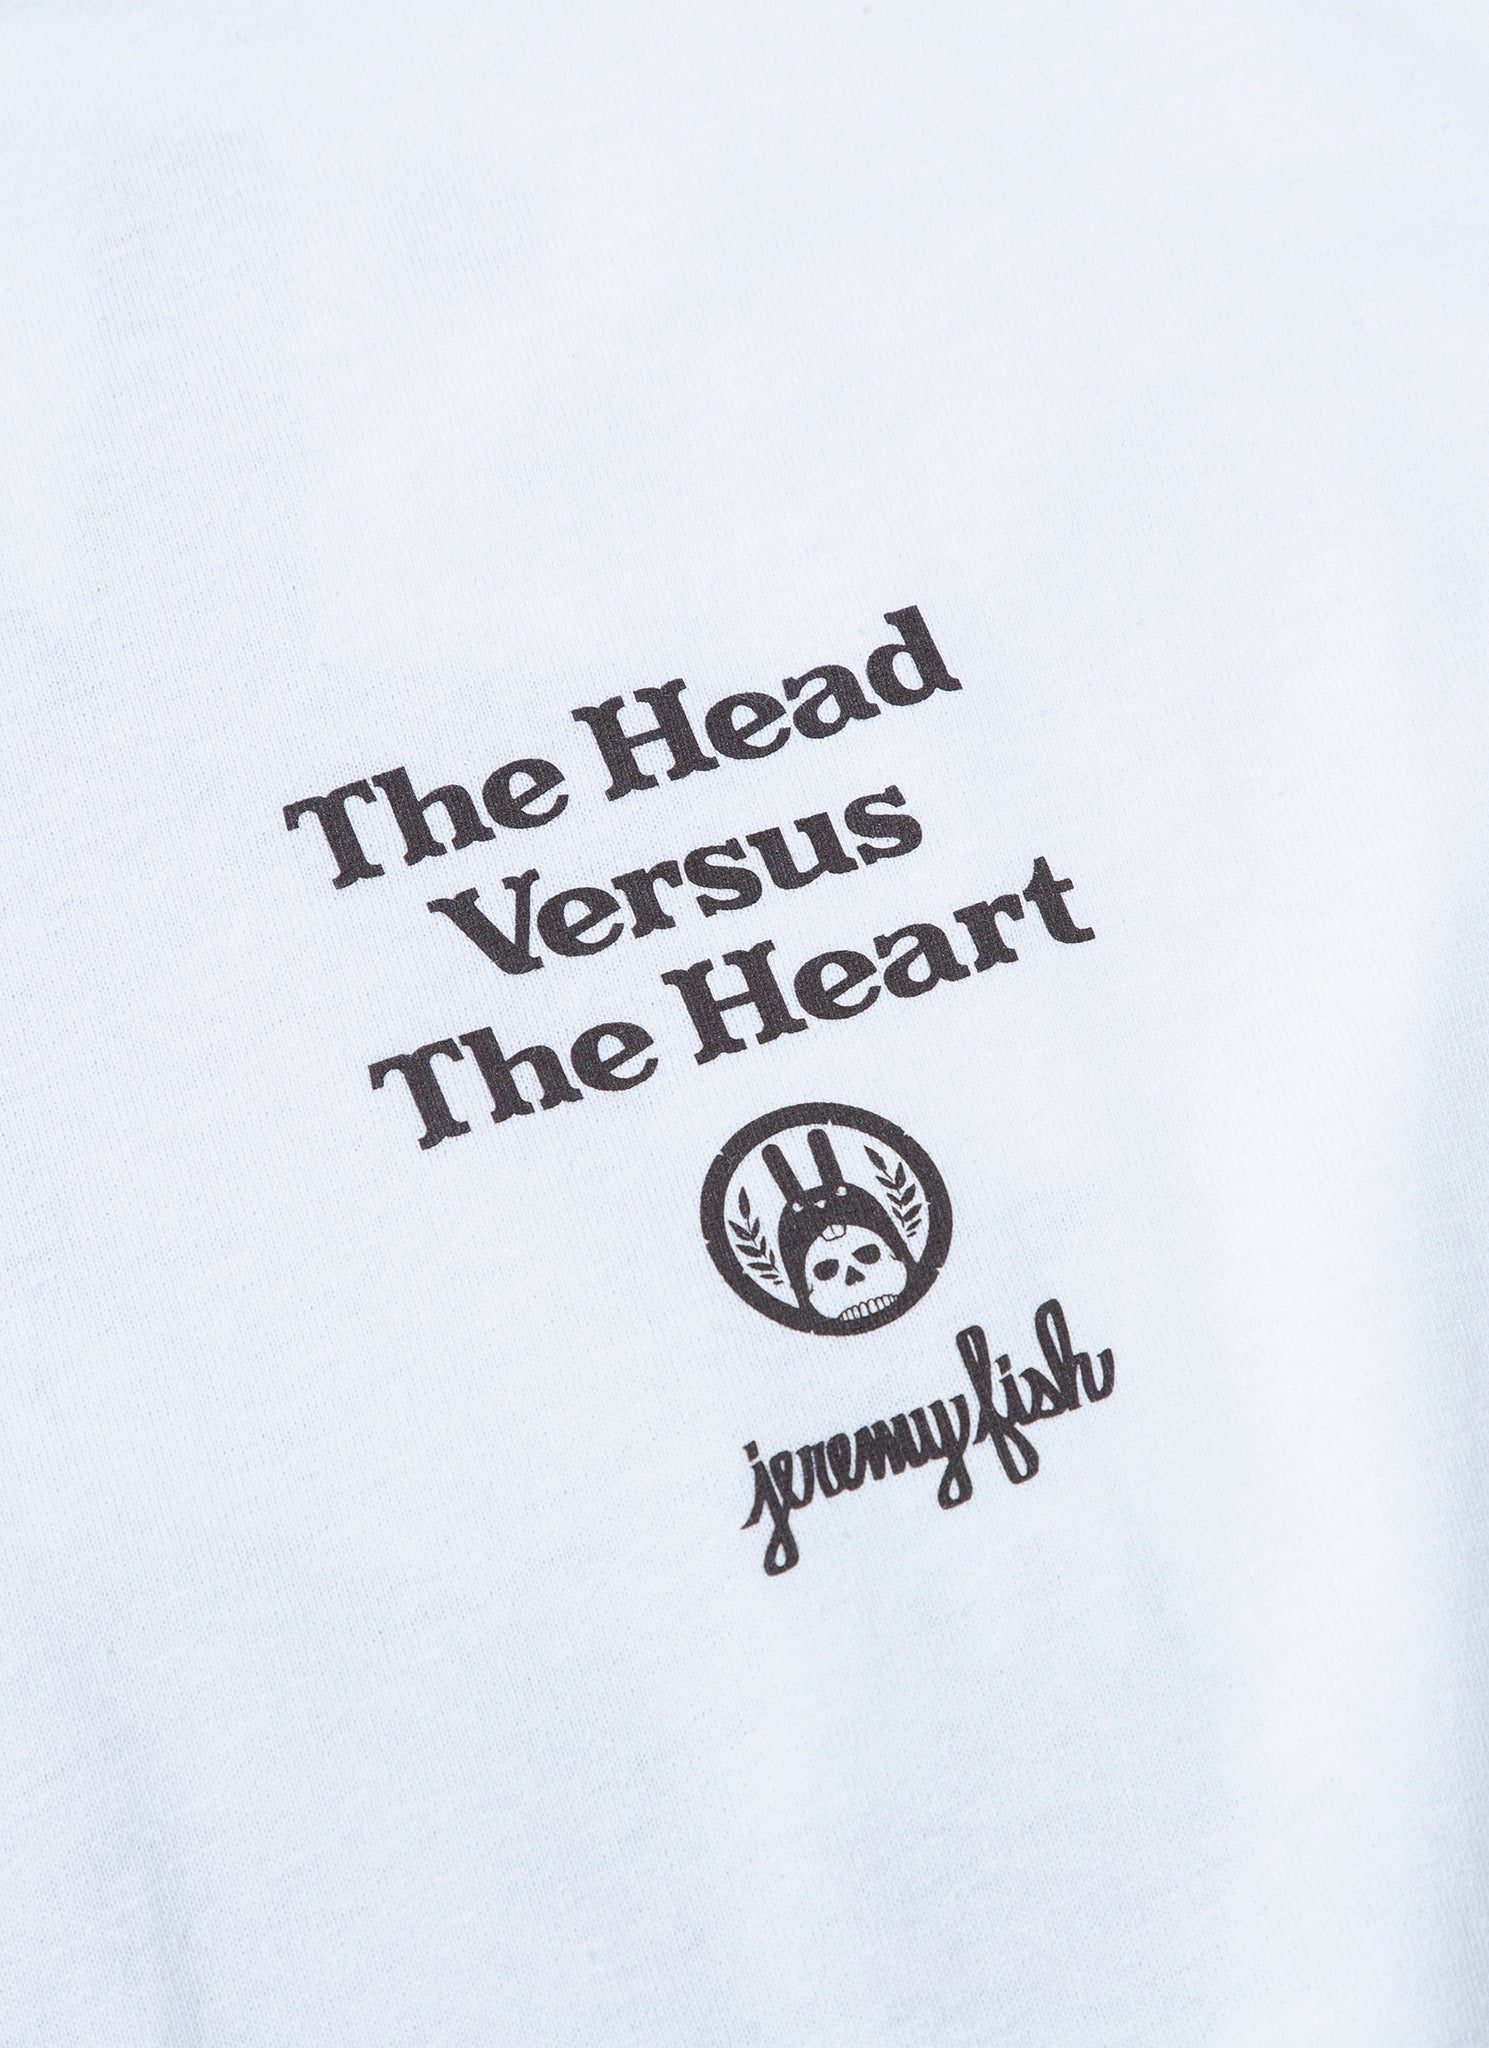 Jeremy Fish  "The Heart" T-SHIRT